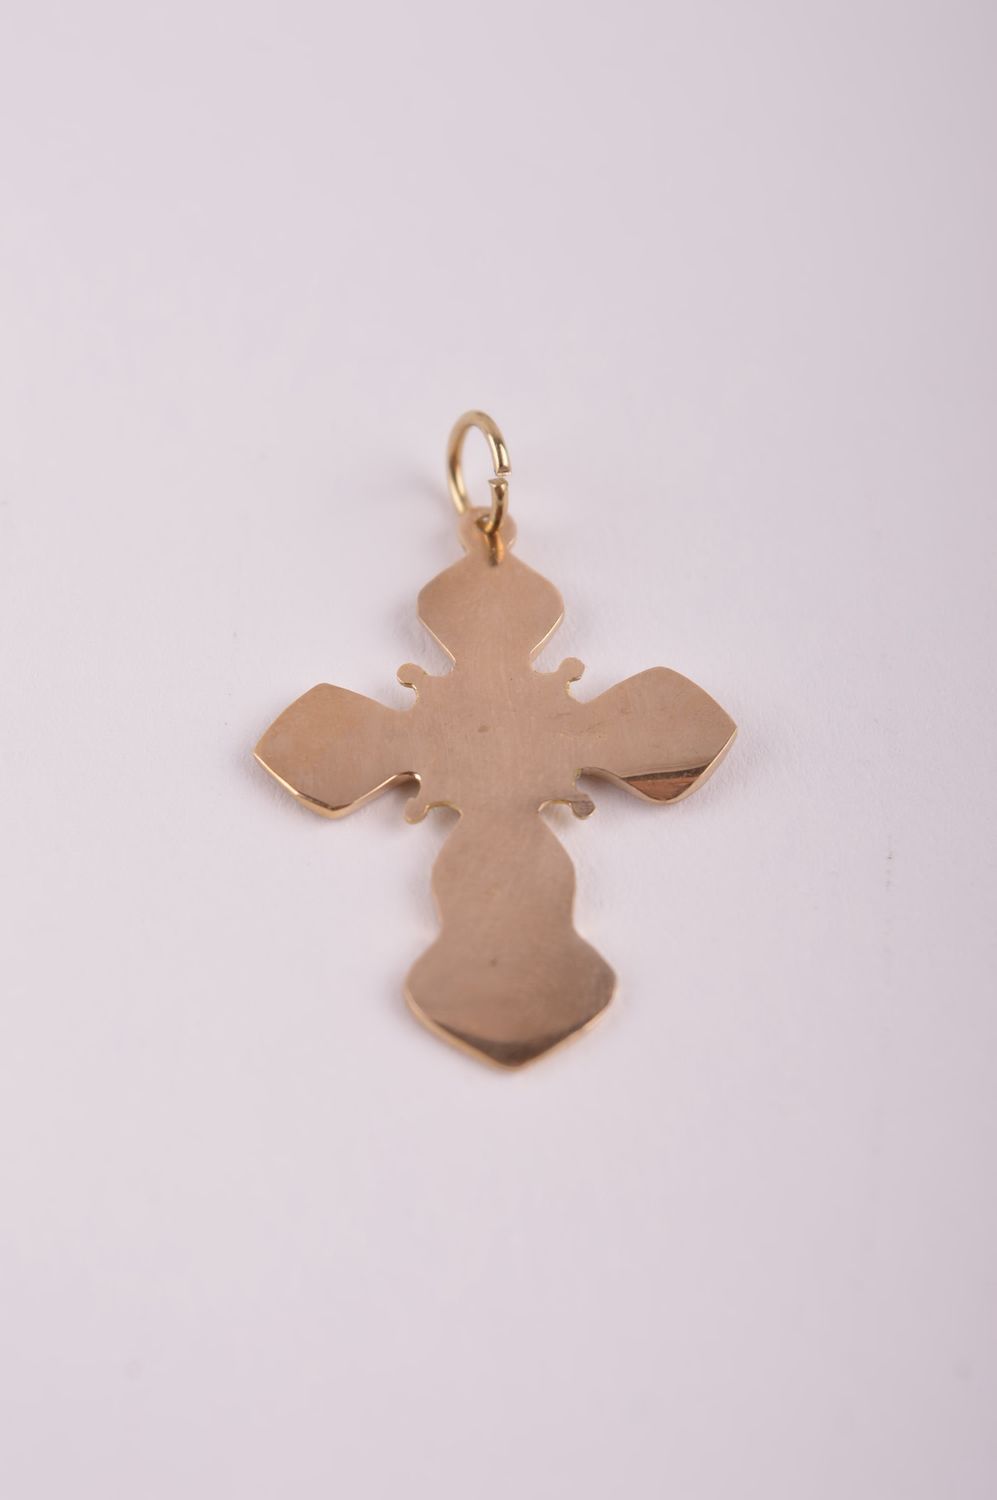 Крестик с камнями handmade подвеска на шею в форме креста украшение из латуни фото 3